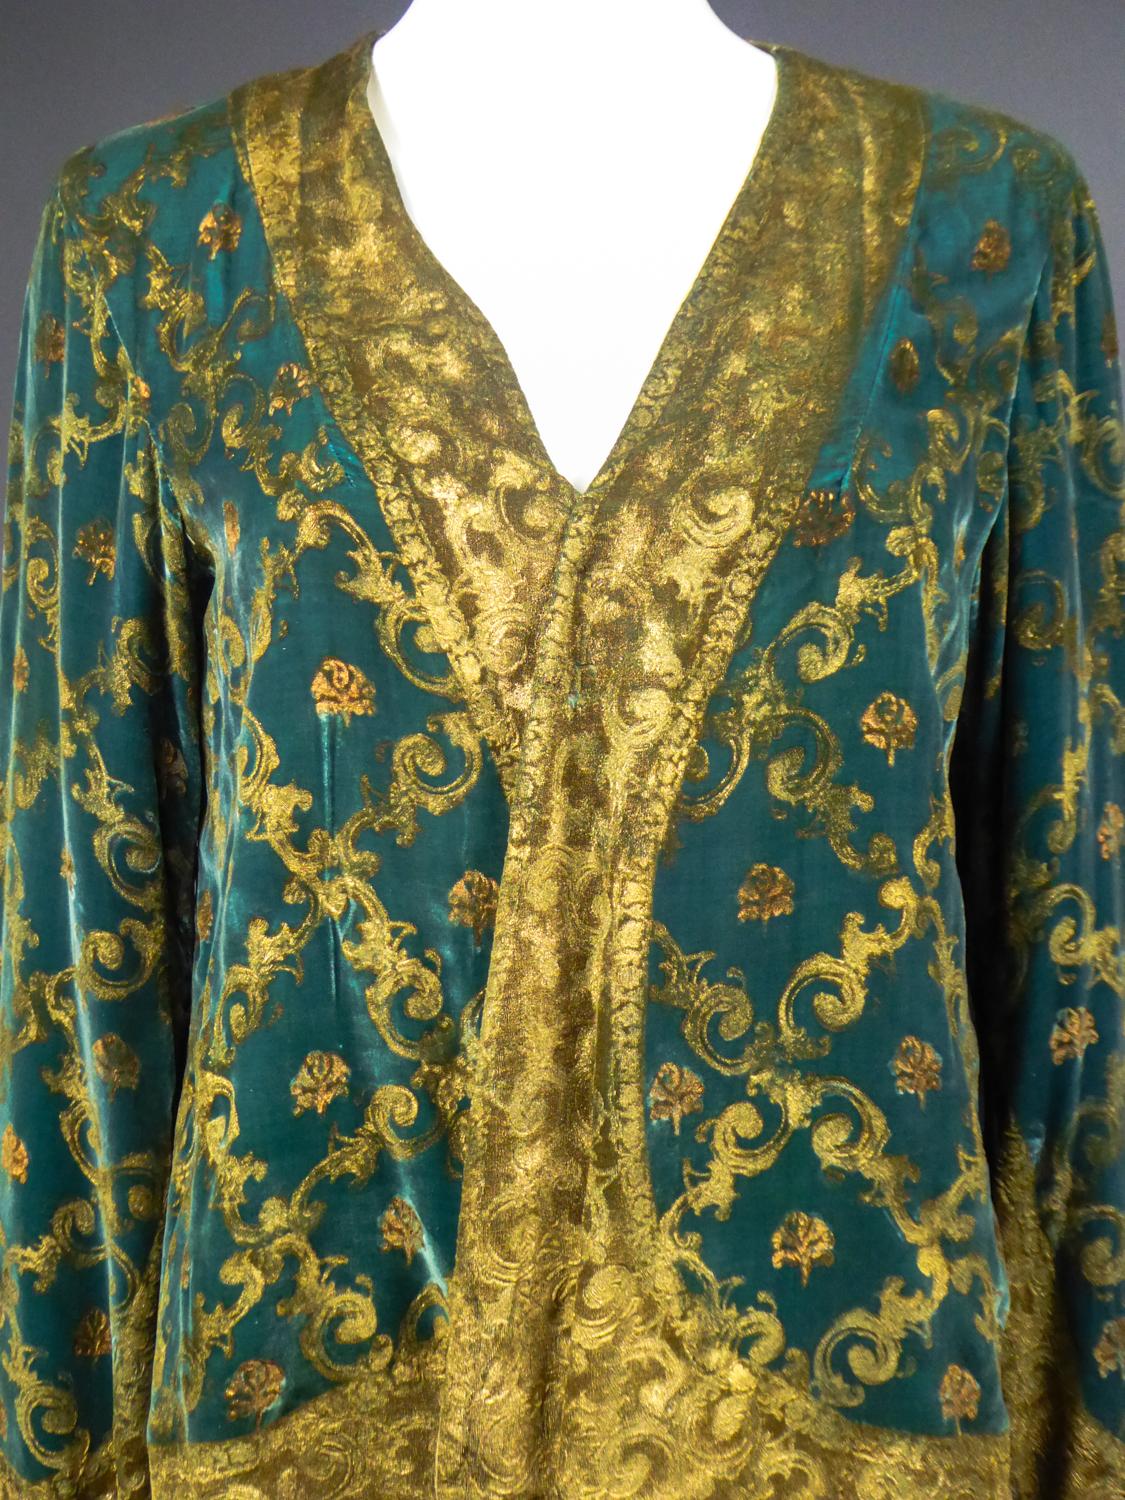 Brown Maria Monacci Gallenga Evening Jacket in Gold Painted Velvet Circa 1930